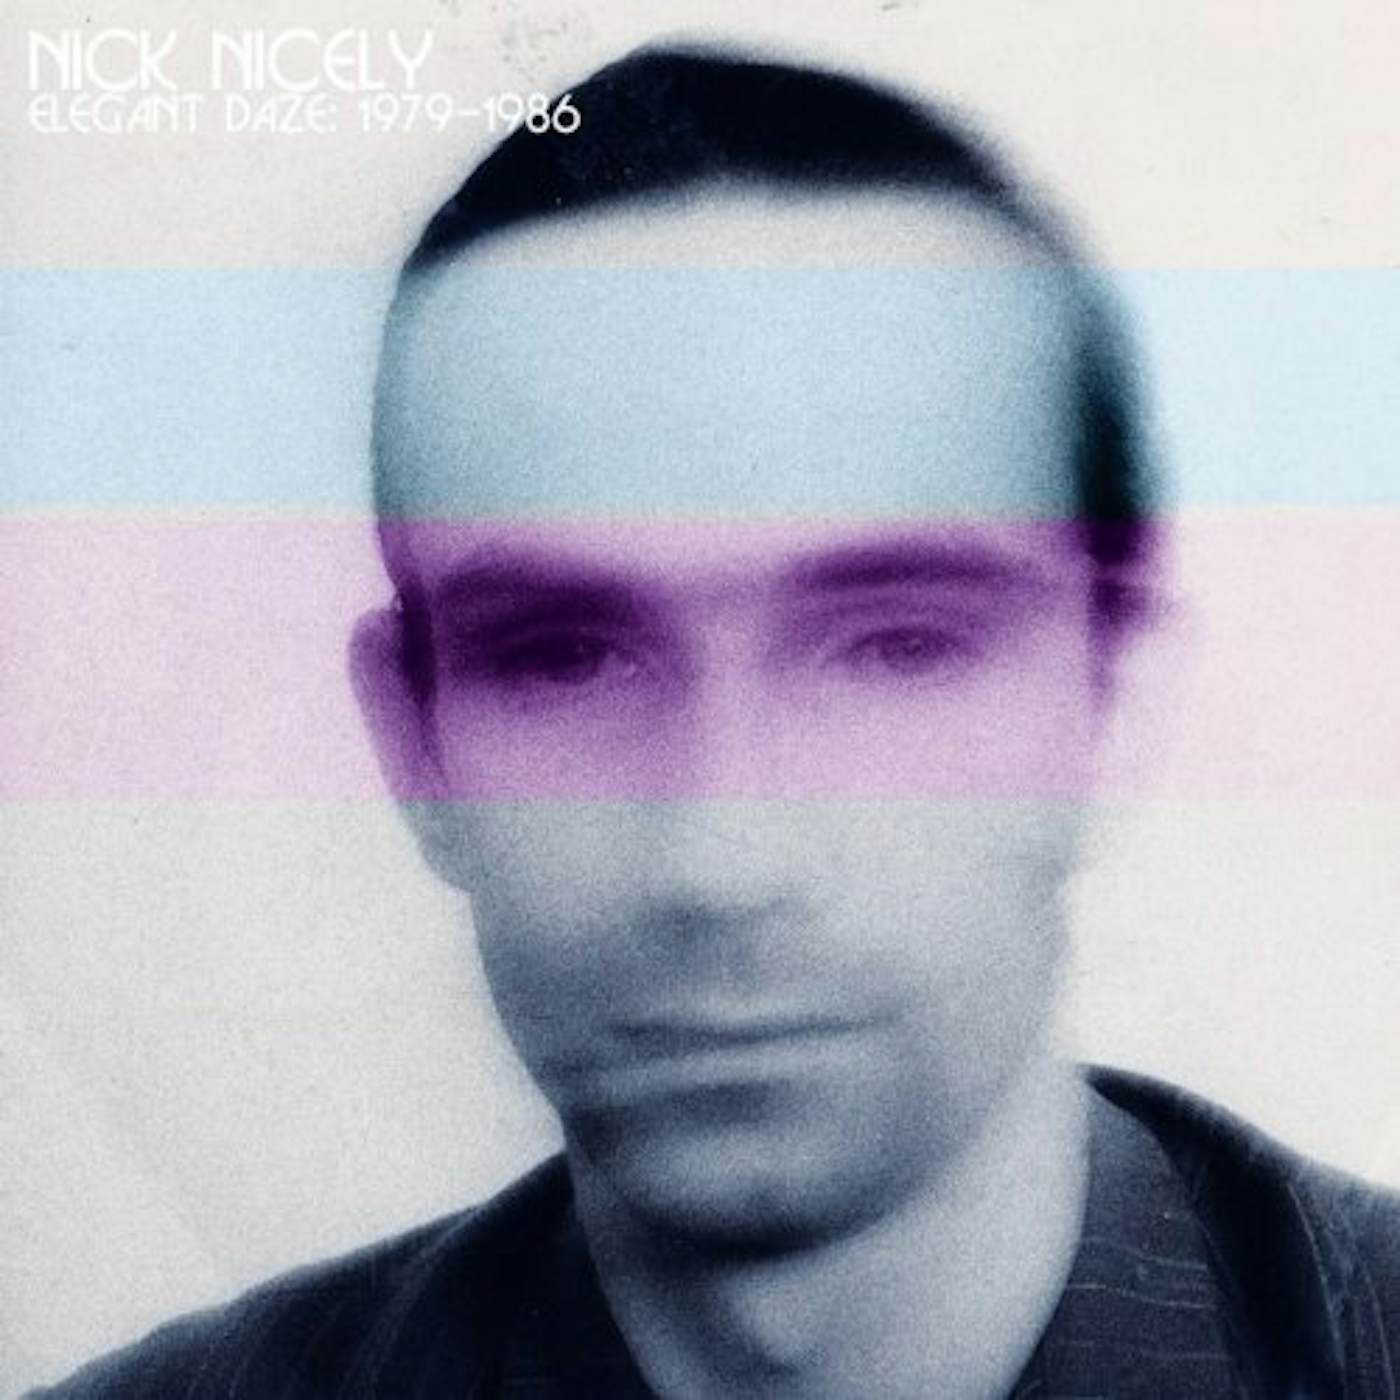 Nick Nicely ELEGANT DAZE Vinyl Record